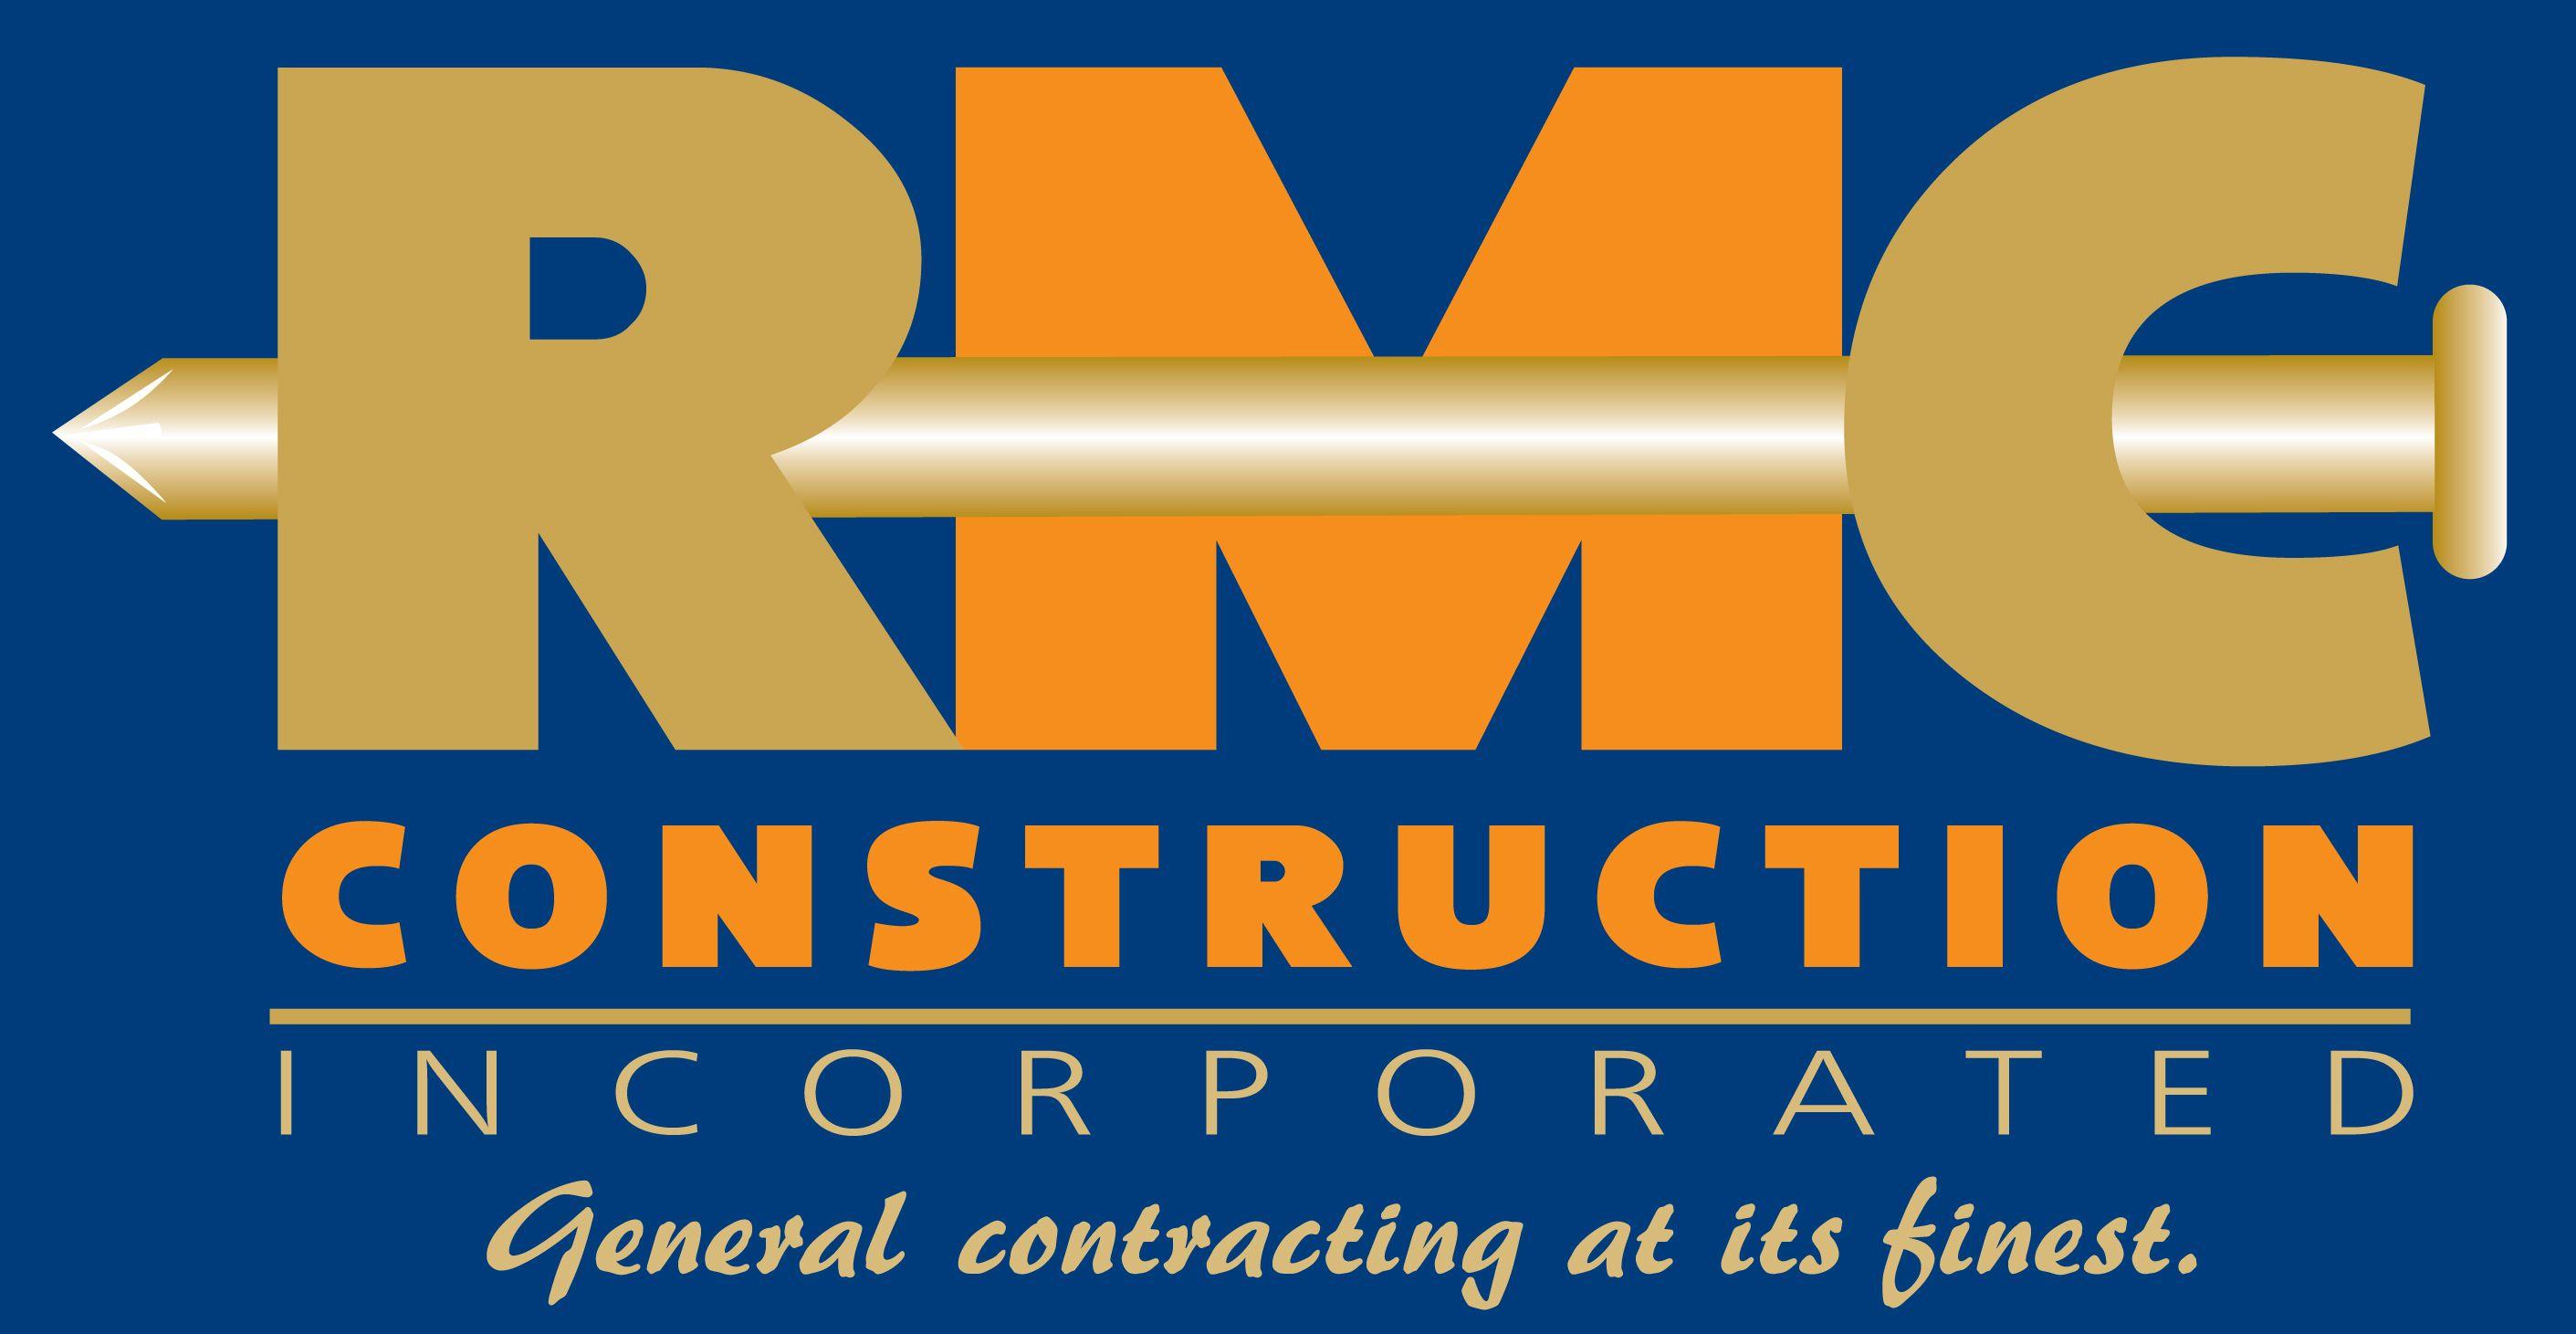 RMC Logo - Construction Company - RMC Construction